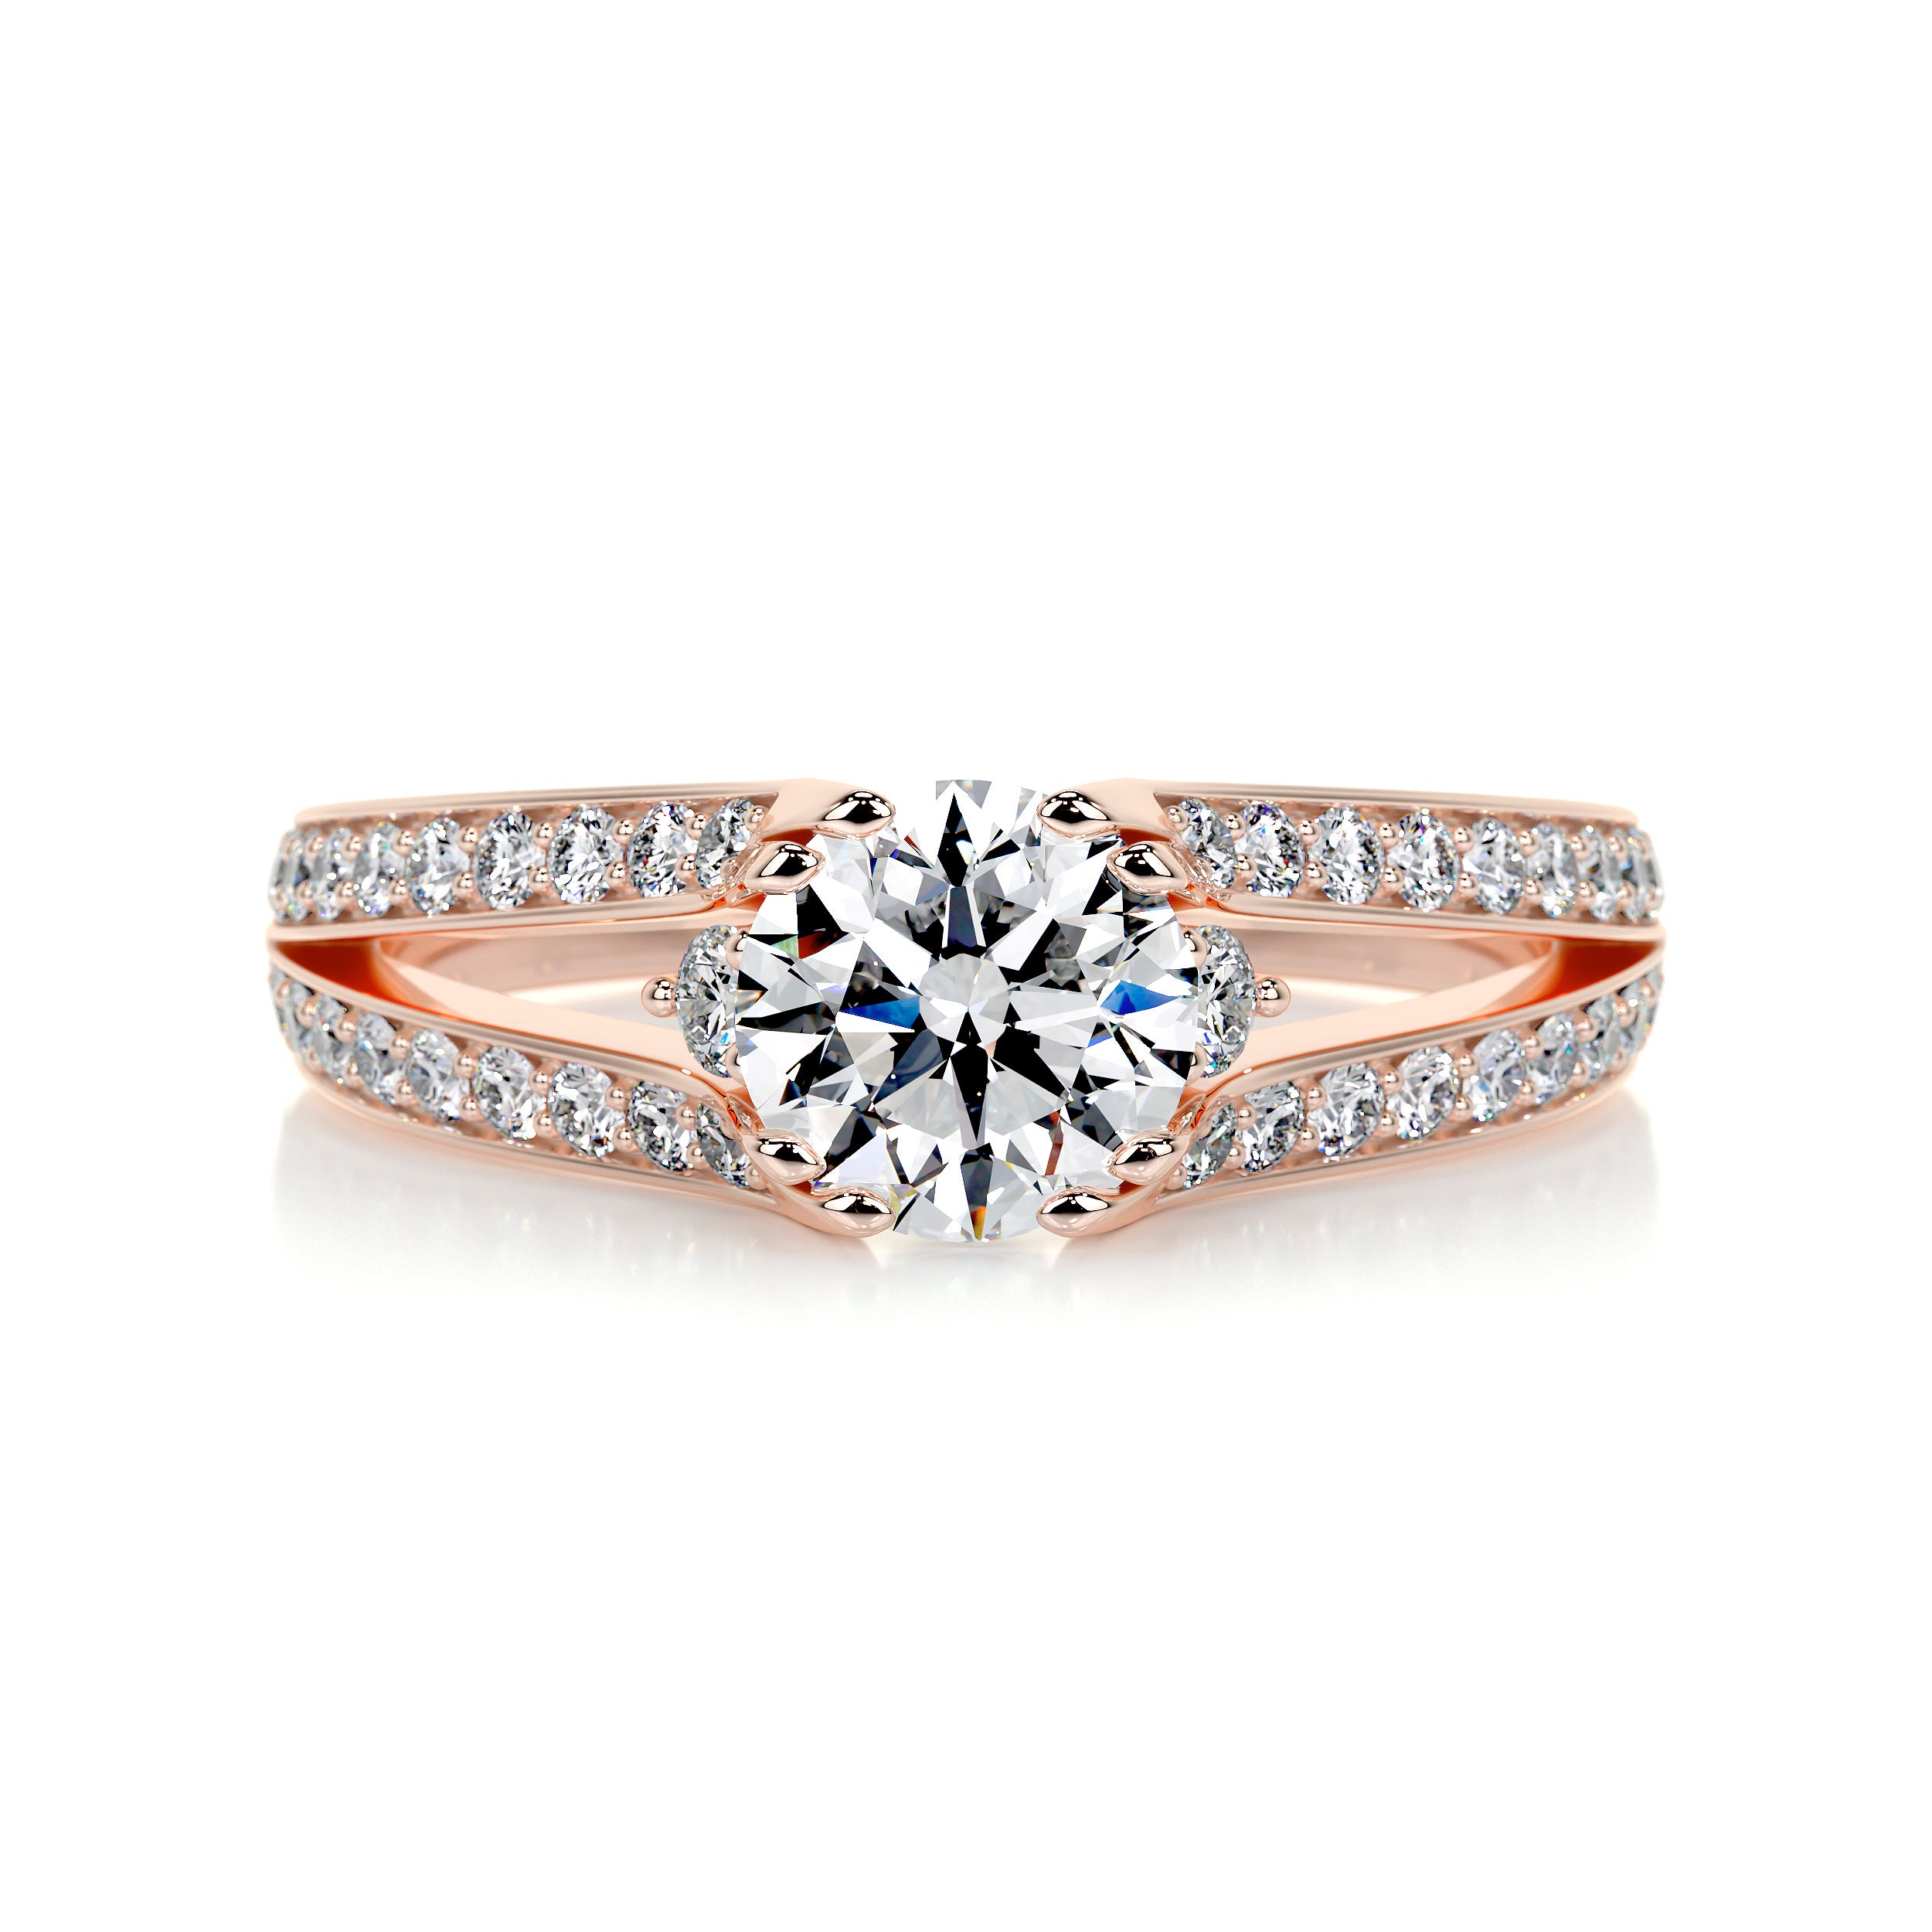 Alex Diamond Engagement Ring   (1.5 Carat) -14K Rose Gold